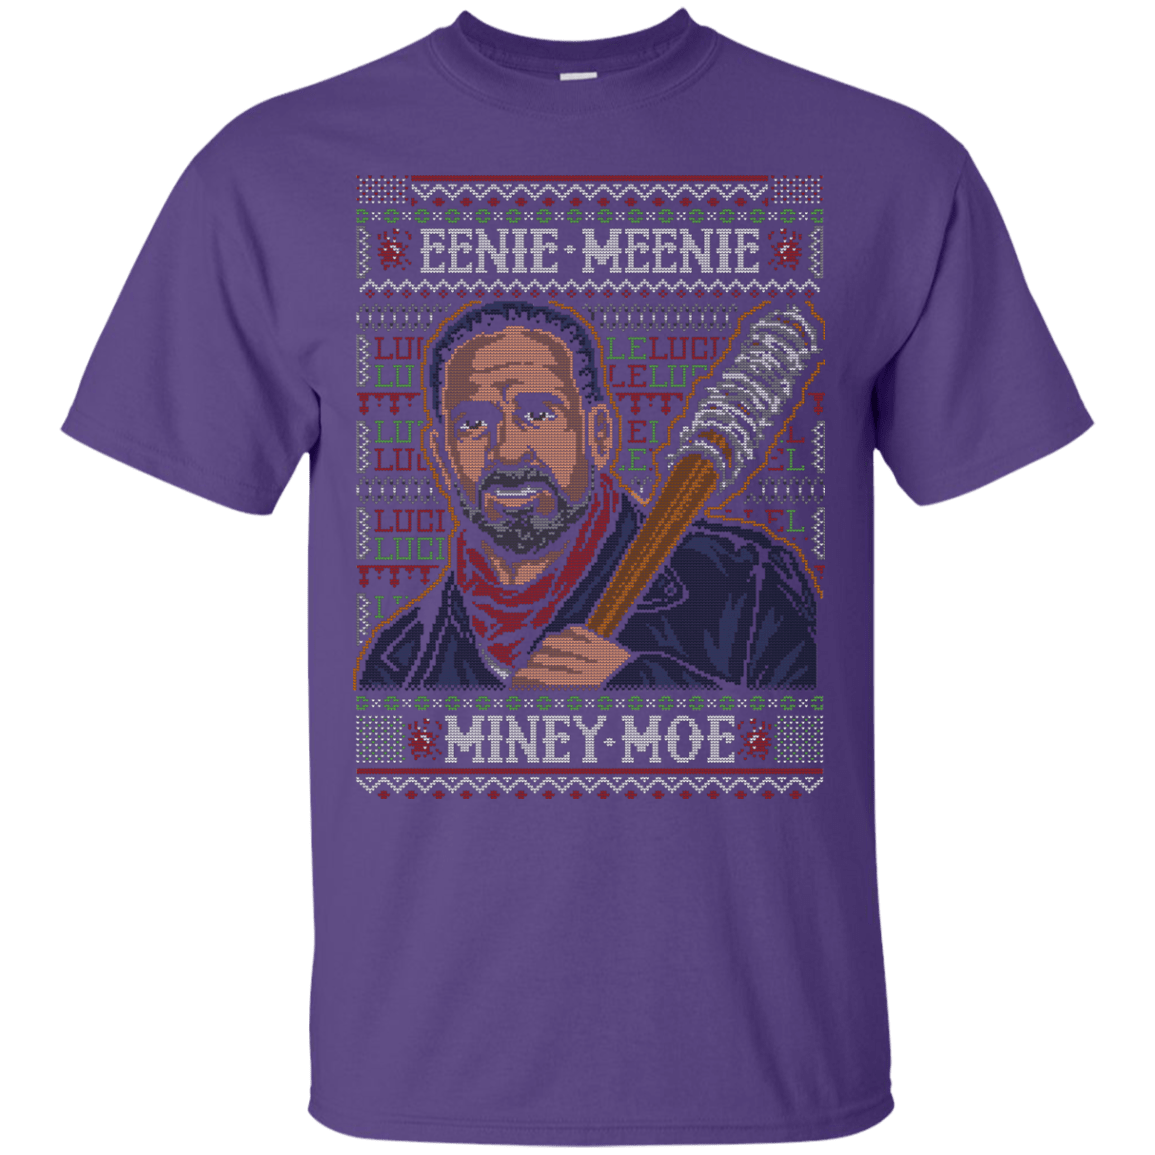 Eenie Meenie Miney Moe T-Shirt